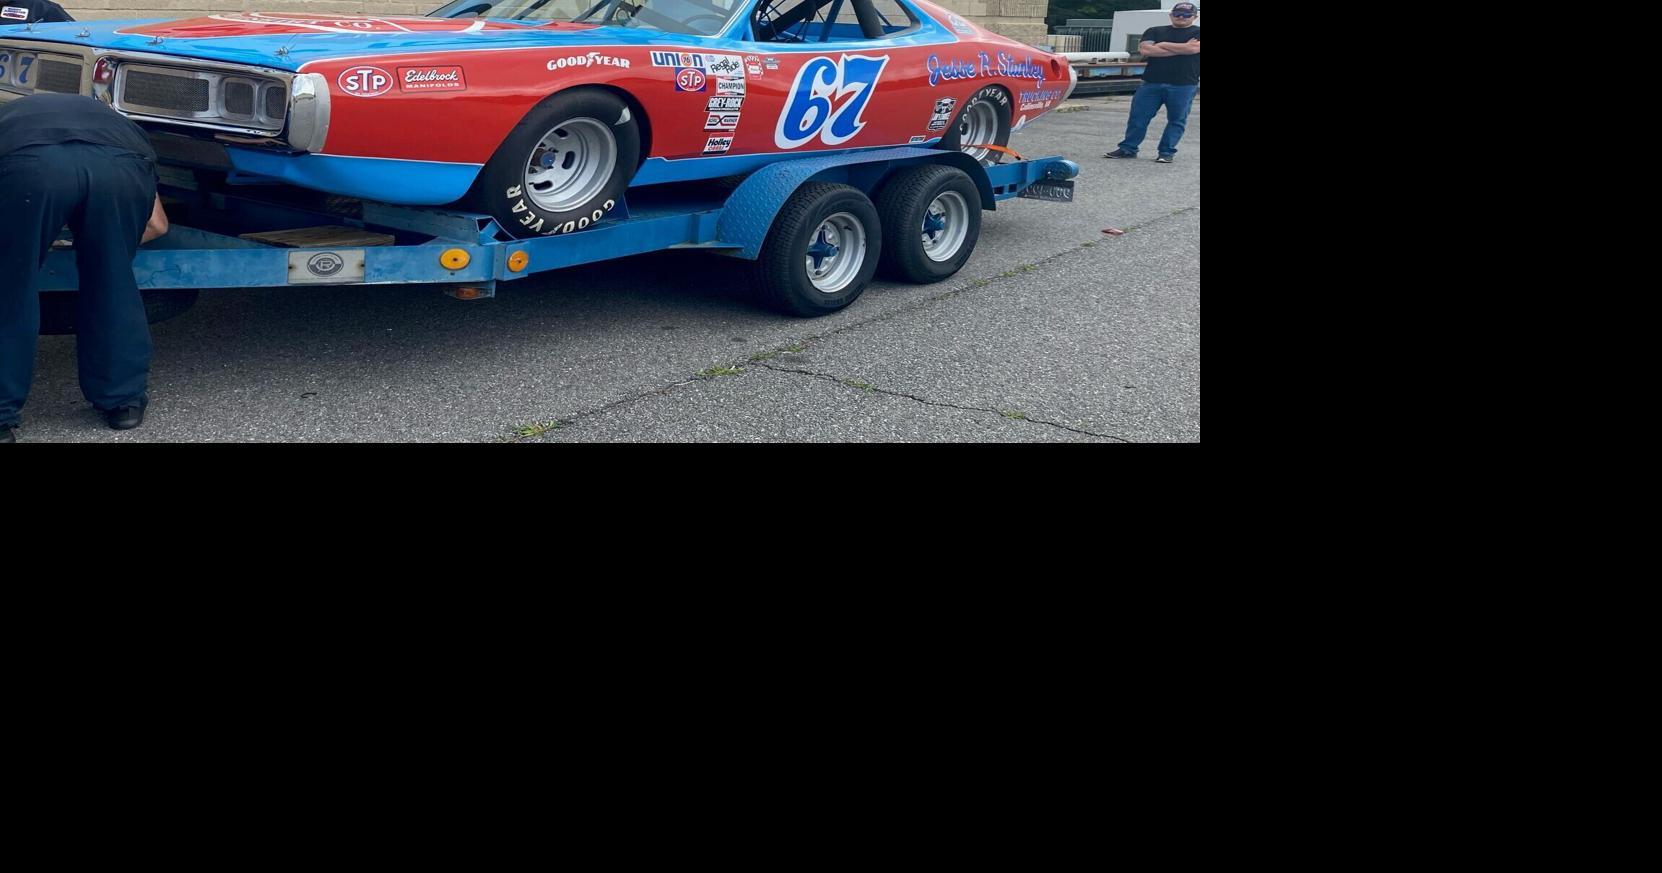 Richard Petty's missing Daytona 500-winning race car leaves Virginia for North Wilkesboro